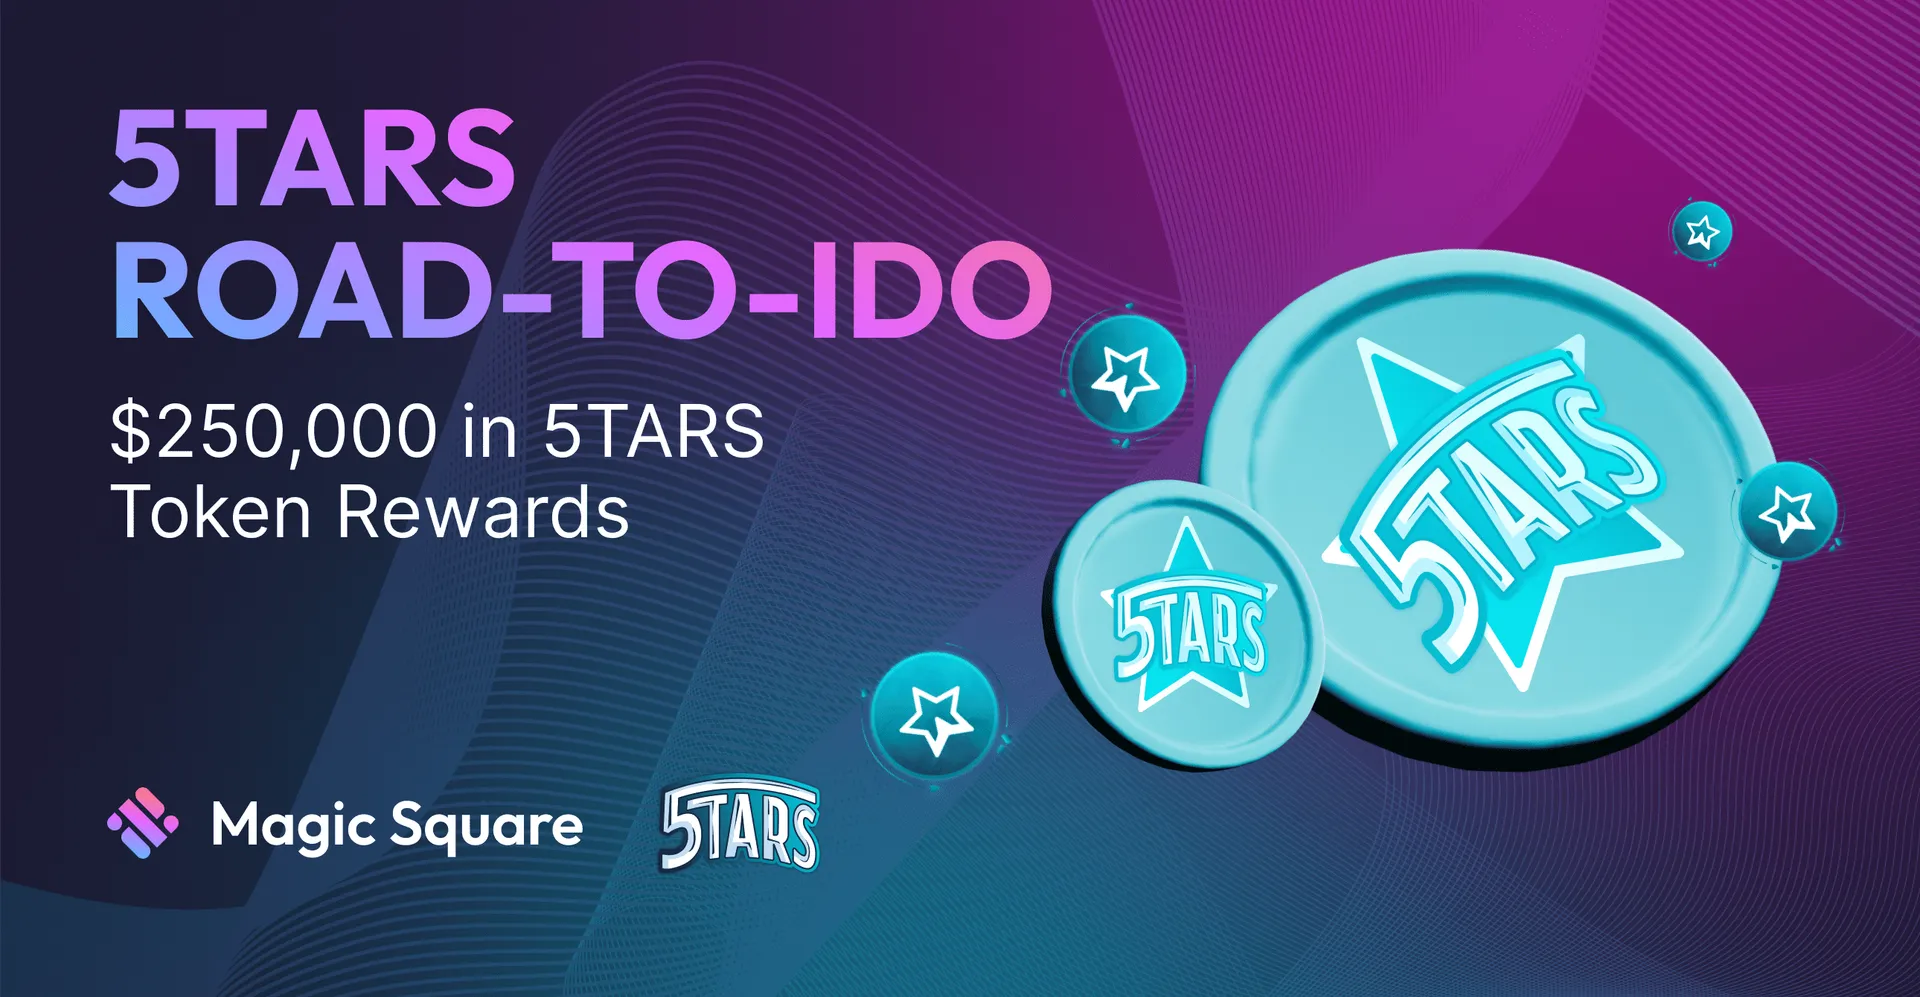 5TARS Road-to-IDO $250,000 in 5TARS Token Rewards. Magic Square. 5tars